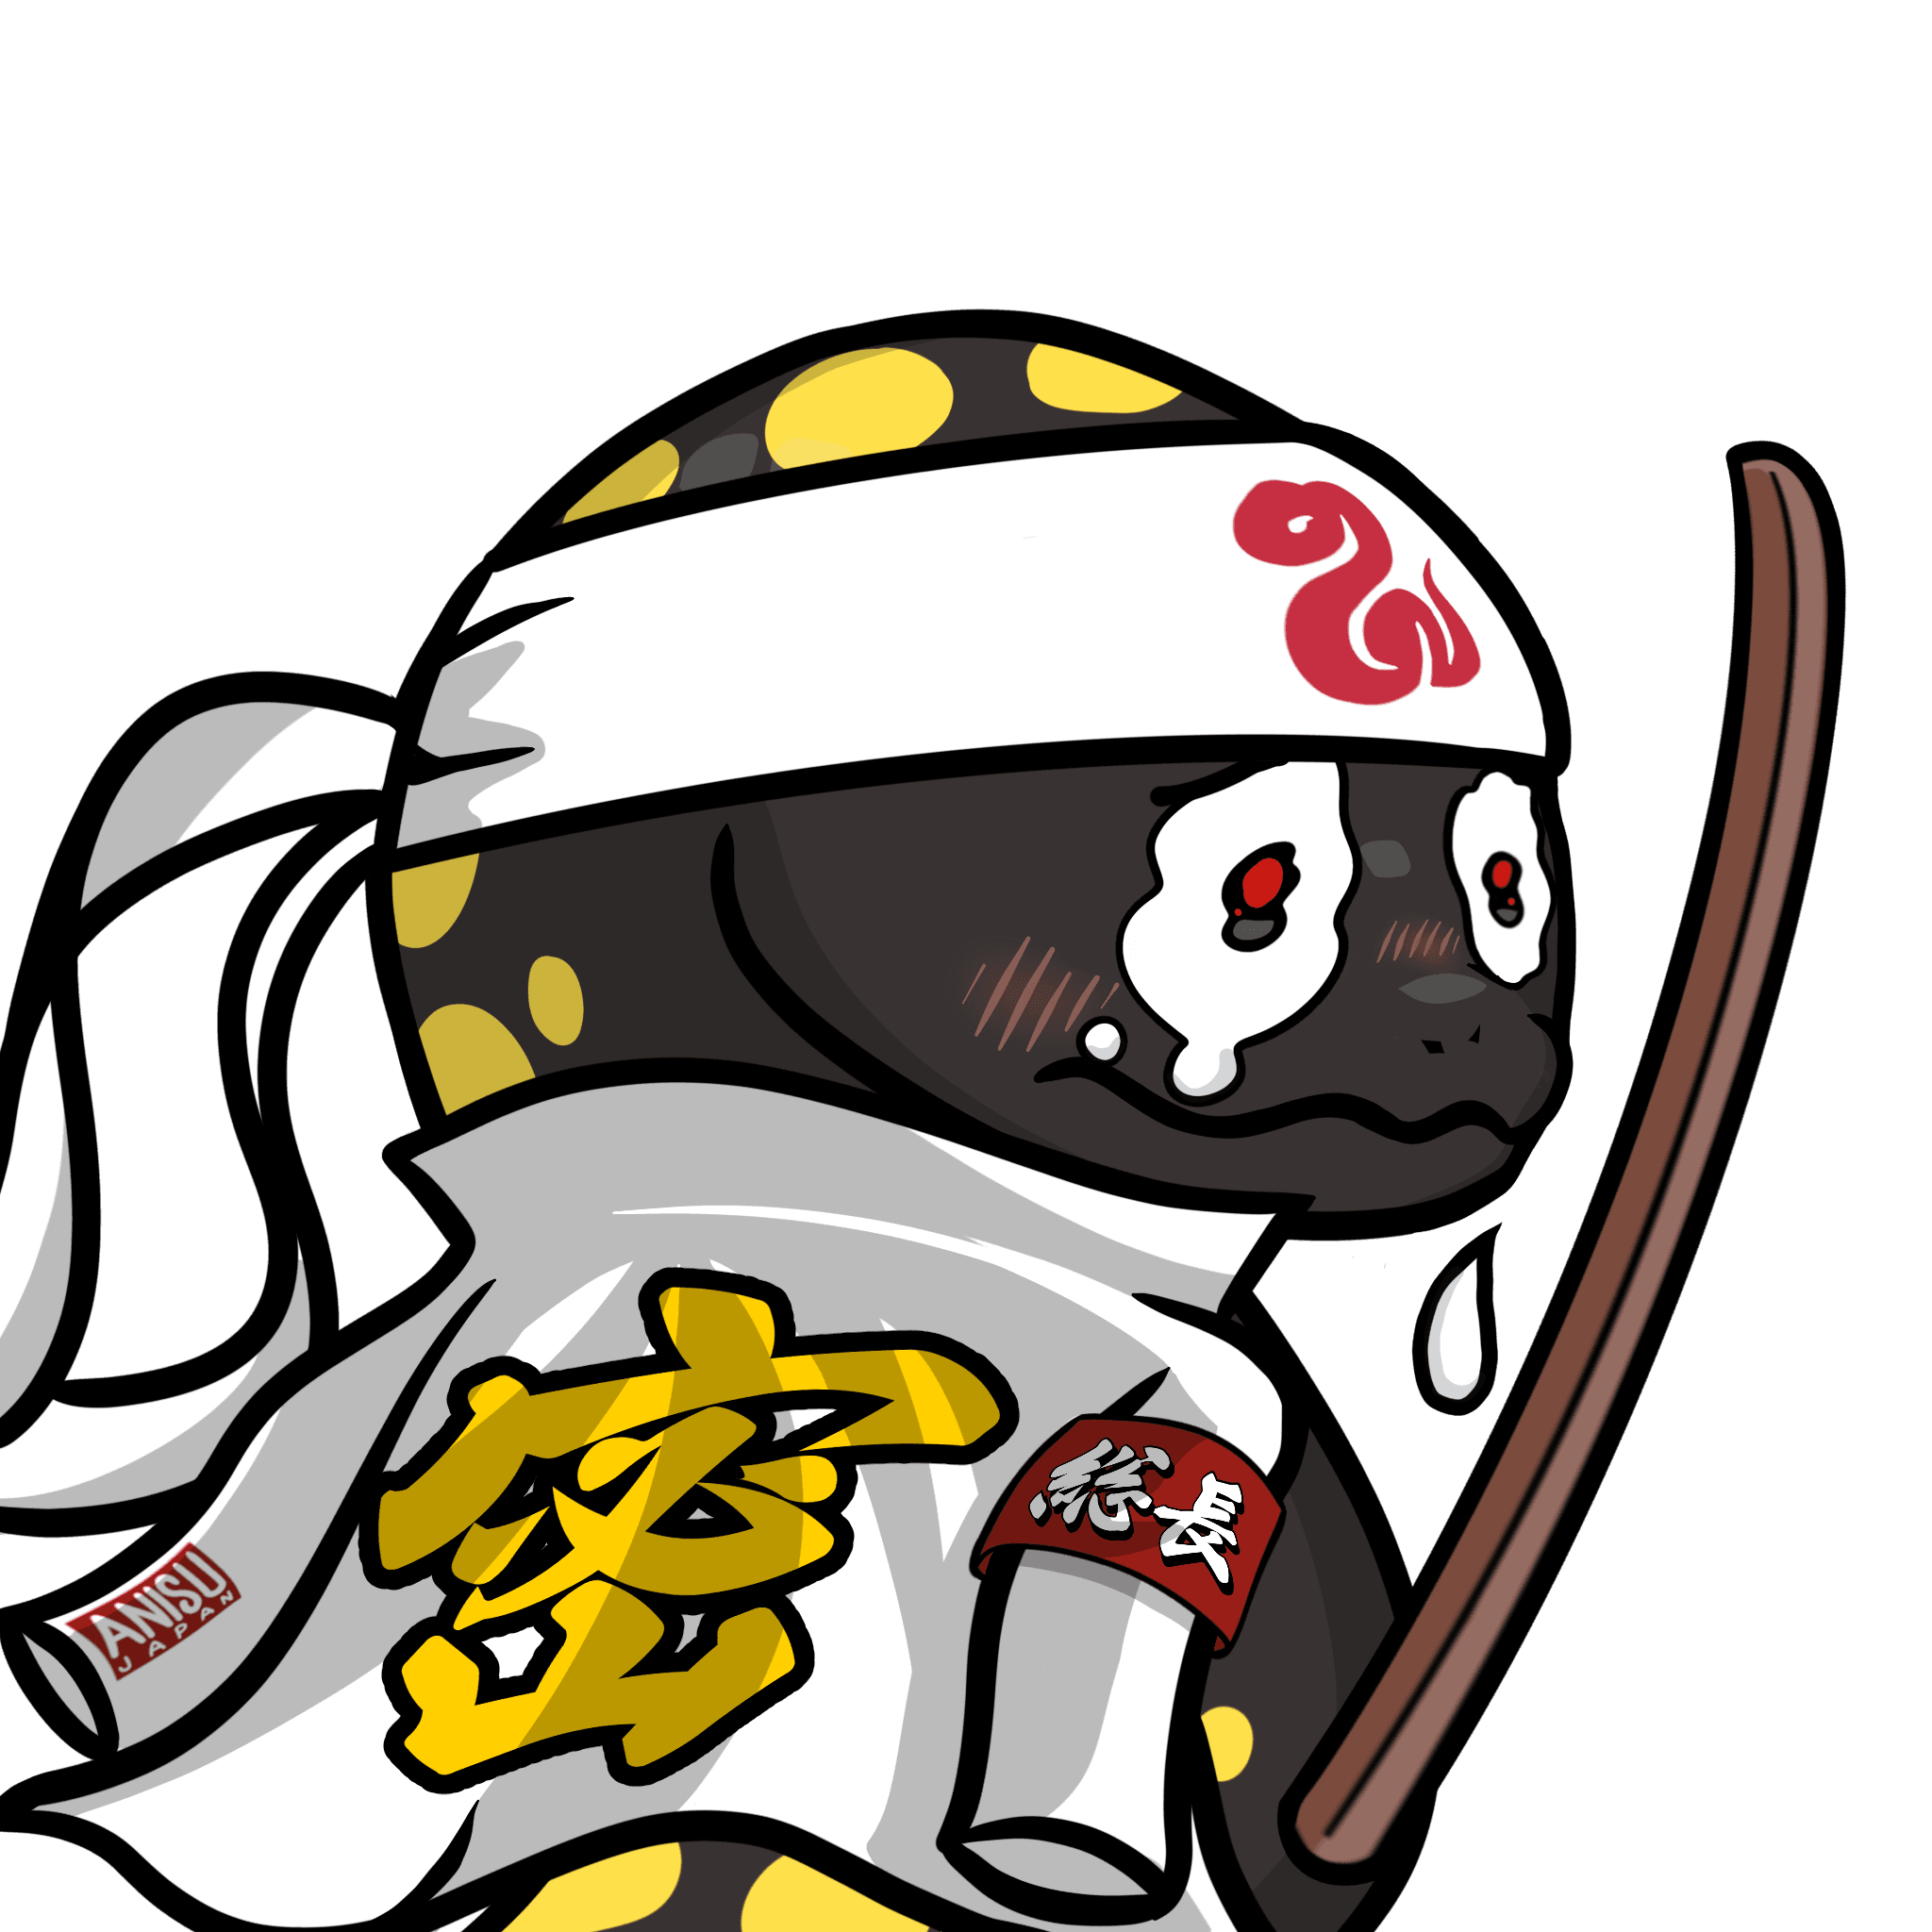 Orochi-Pointed-salamander #2243